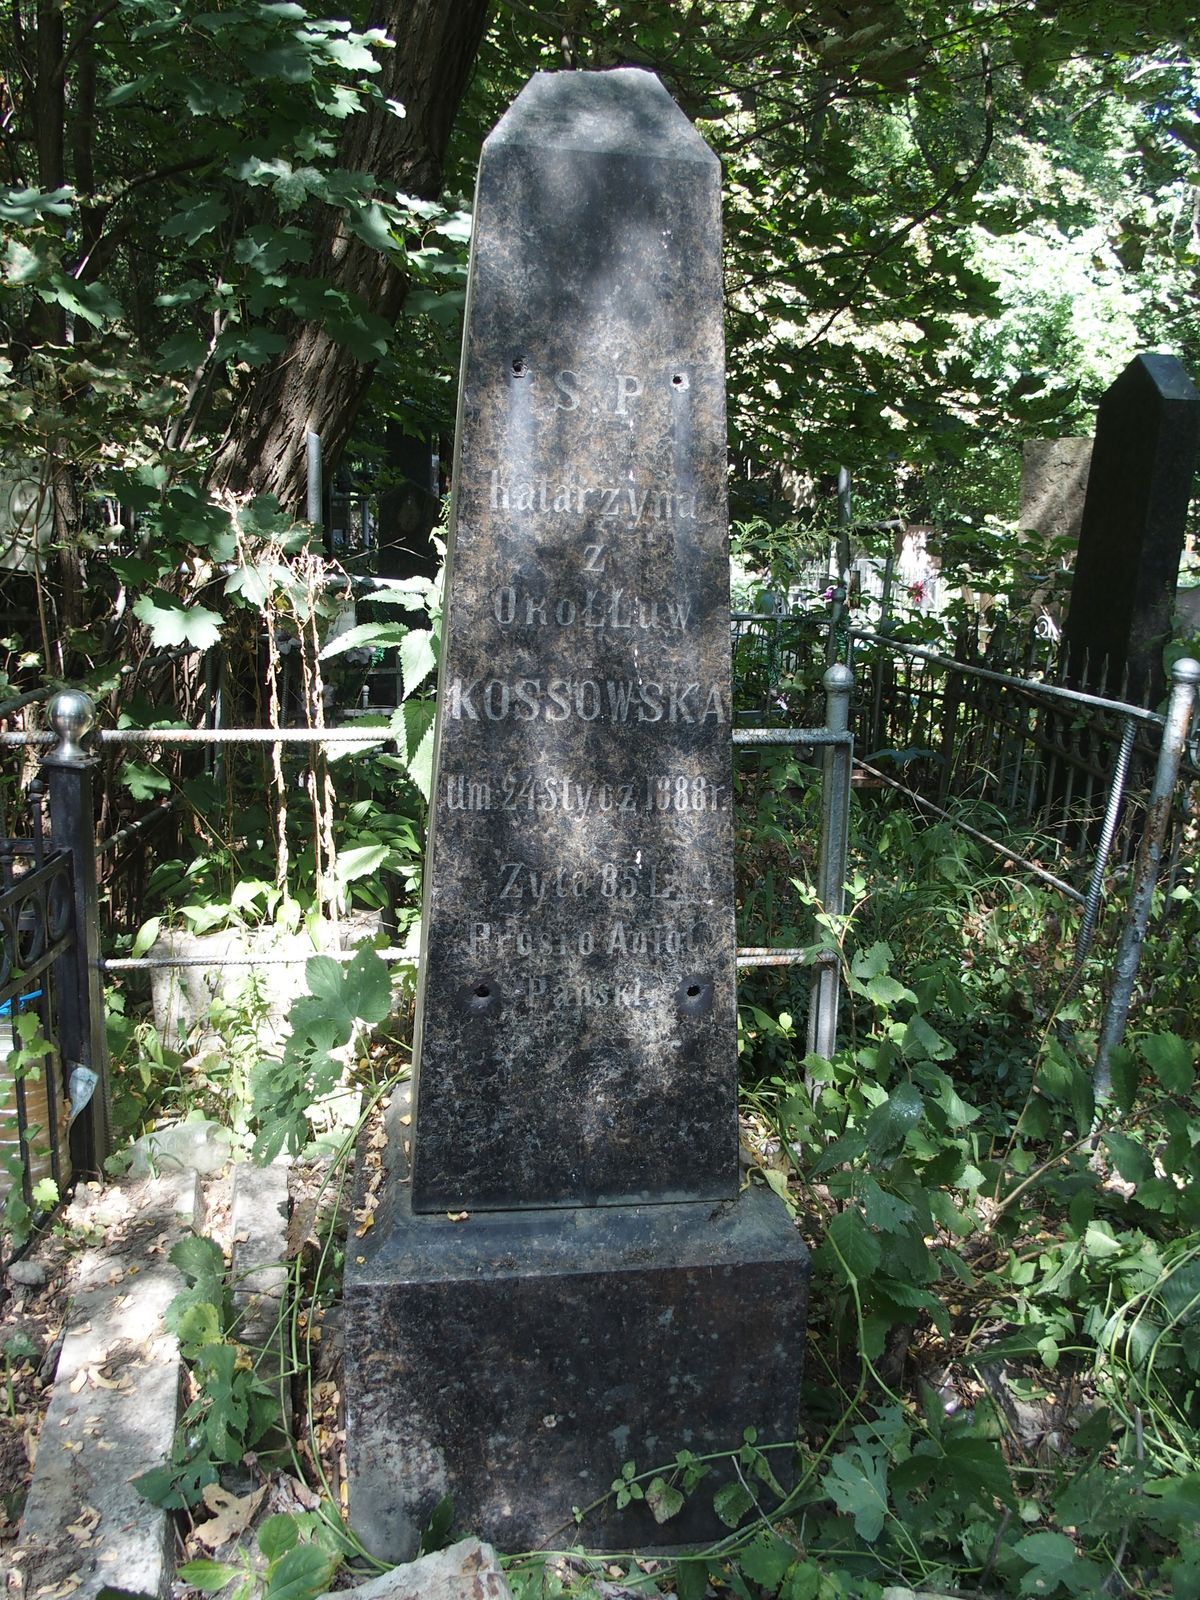 Tombstone of Katharina Kossovskaya, Baikalkova cemetery in Kiev, as of 2021